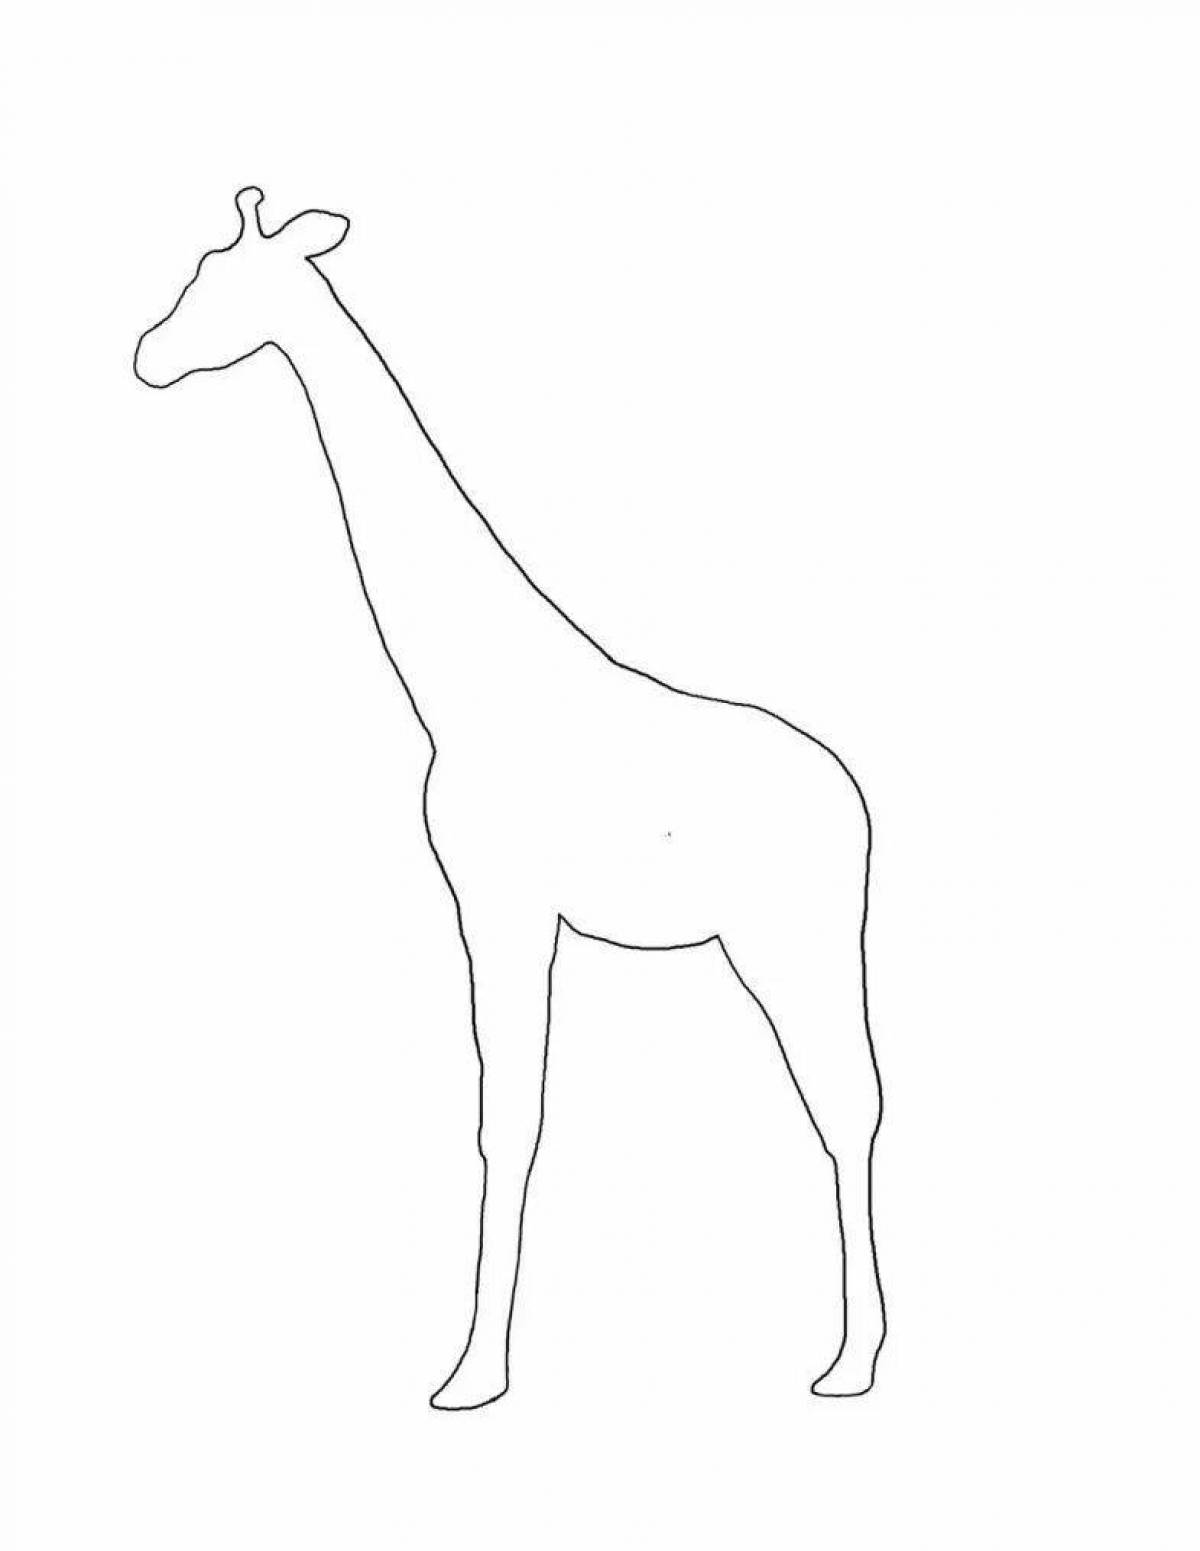 Exuberant giraffe without spots for children